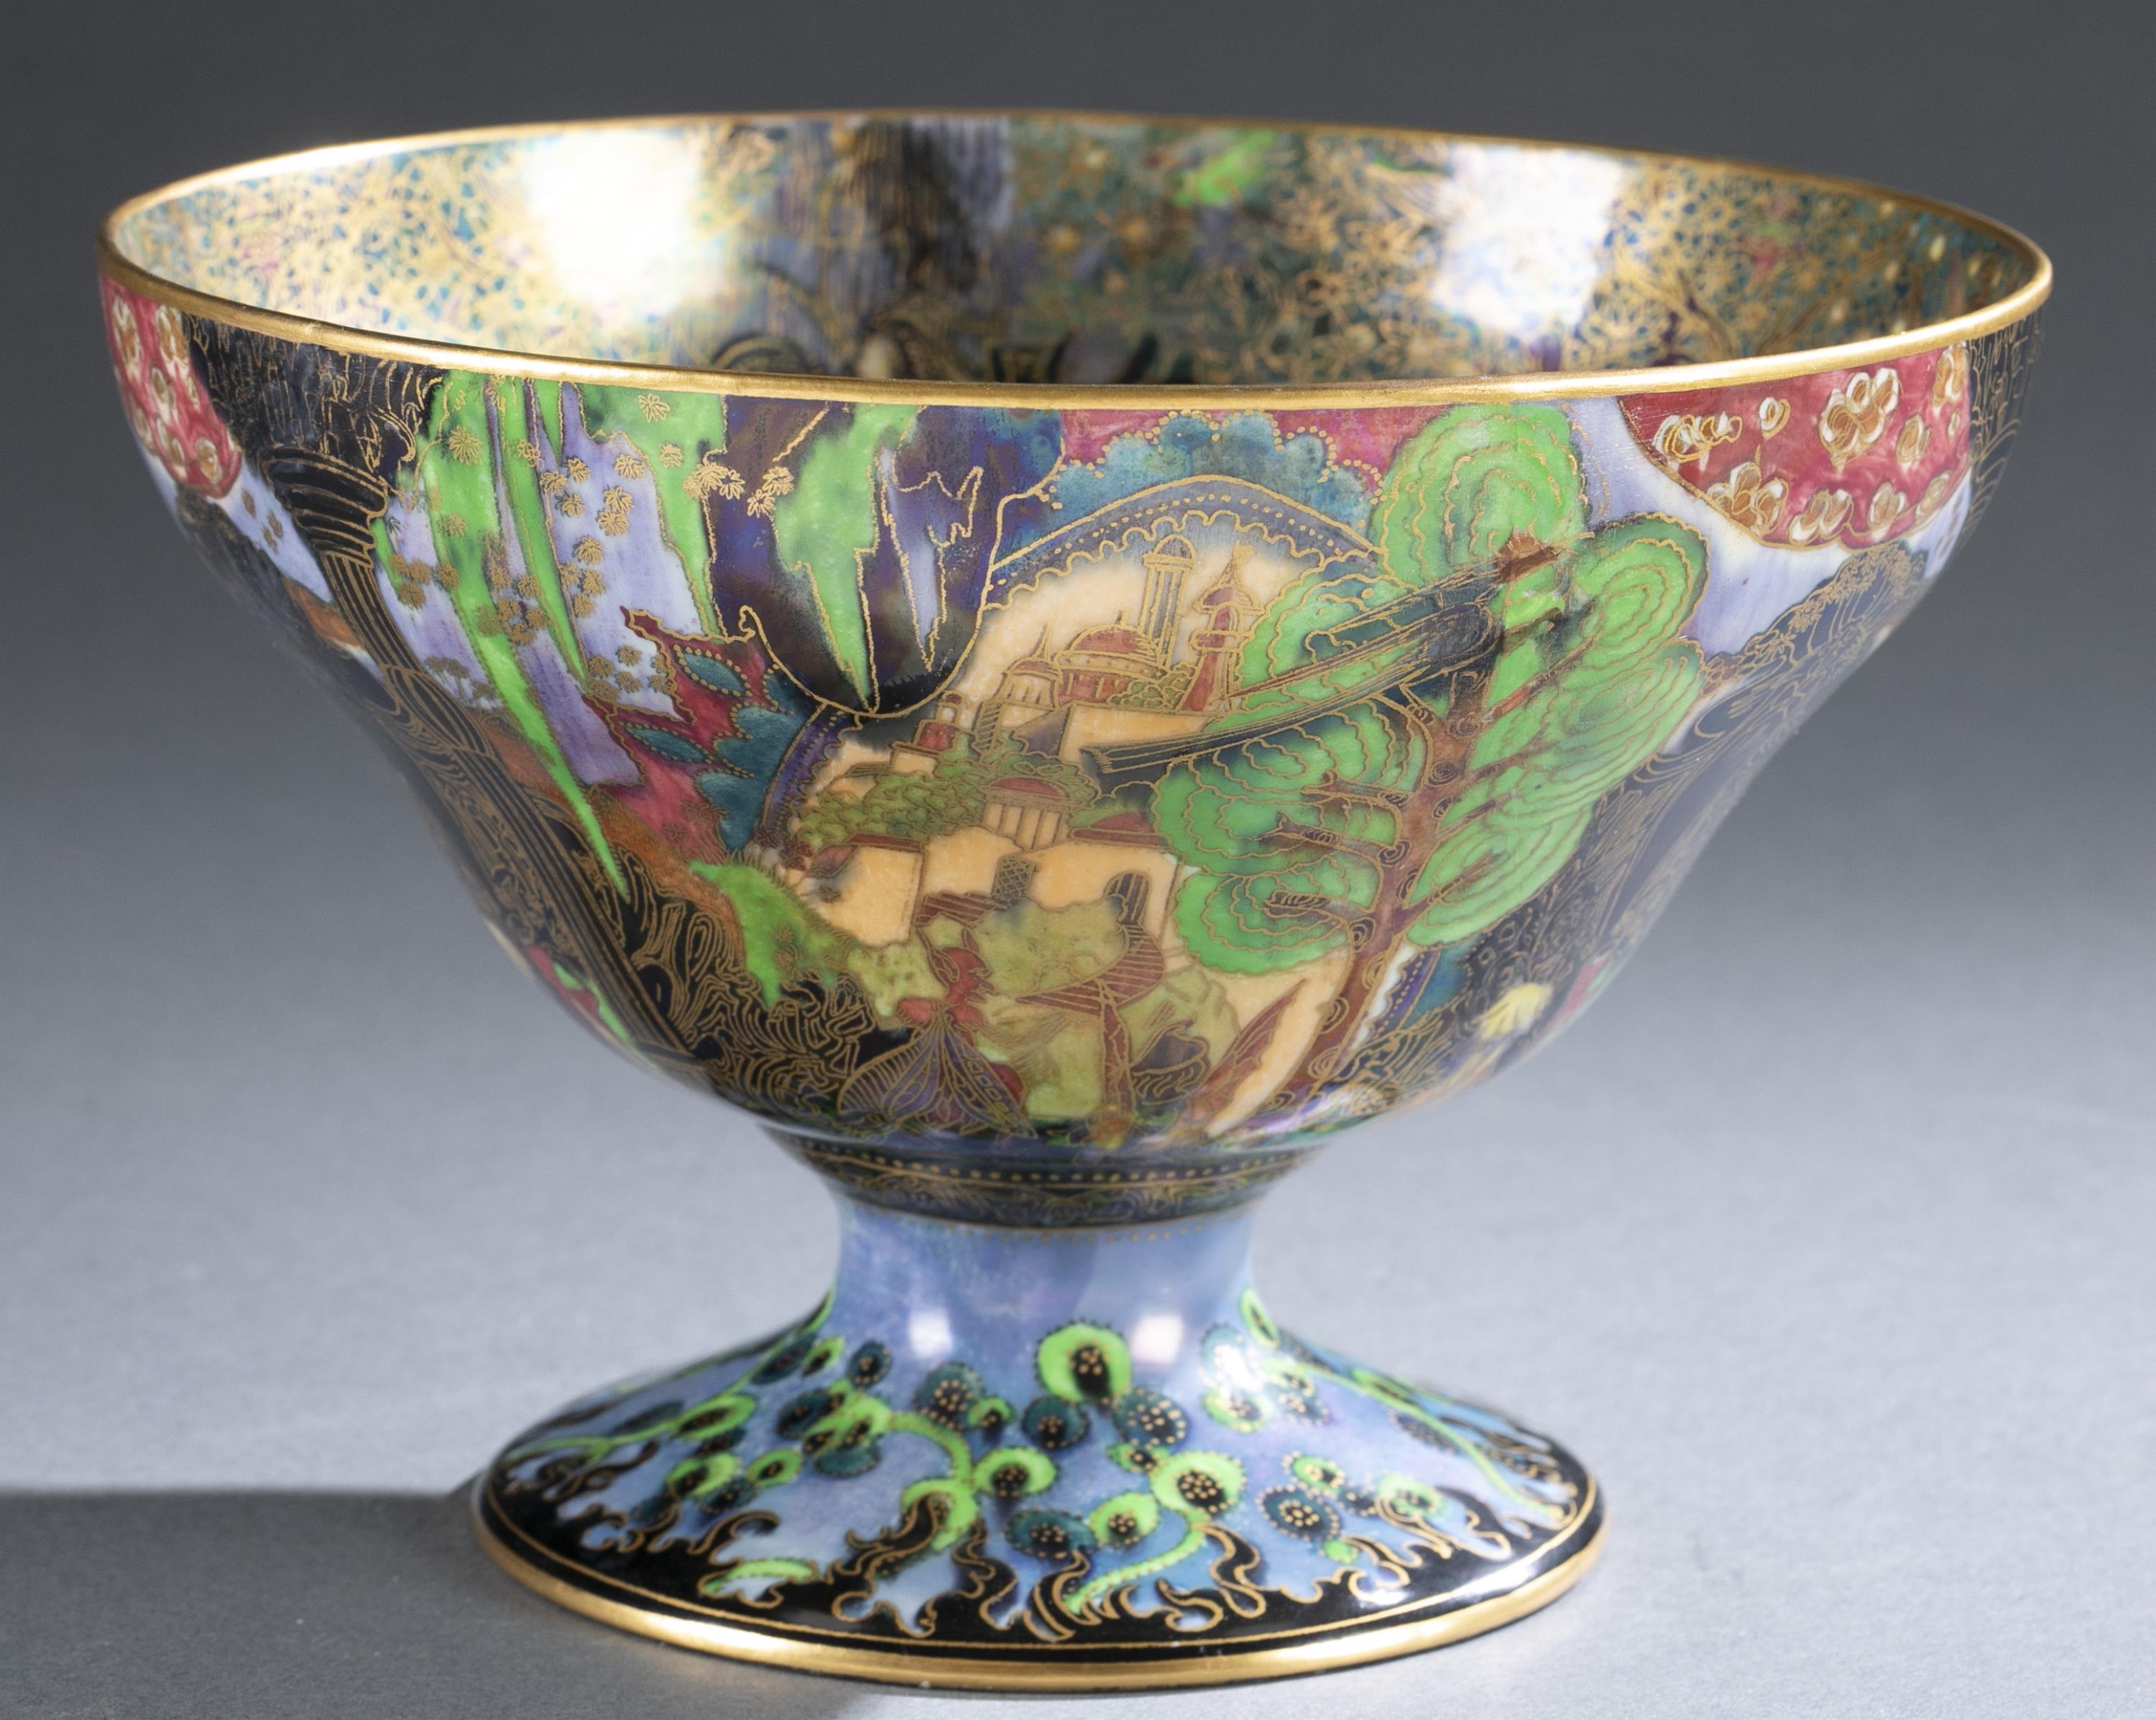 Wedgwood, "Garden of Paradise", lustre bowl.